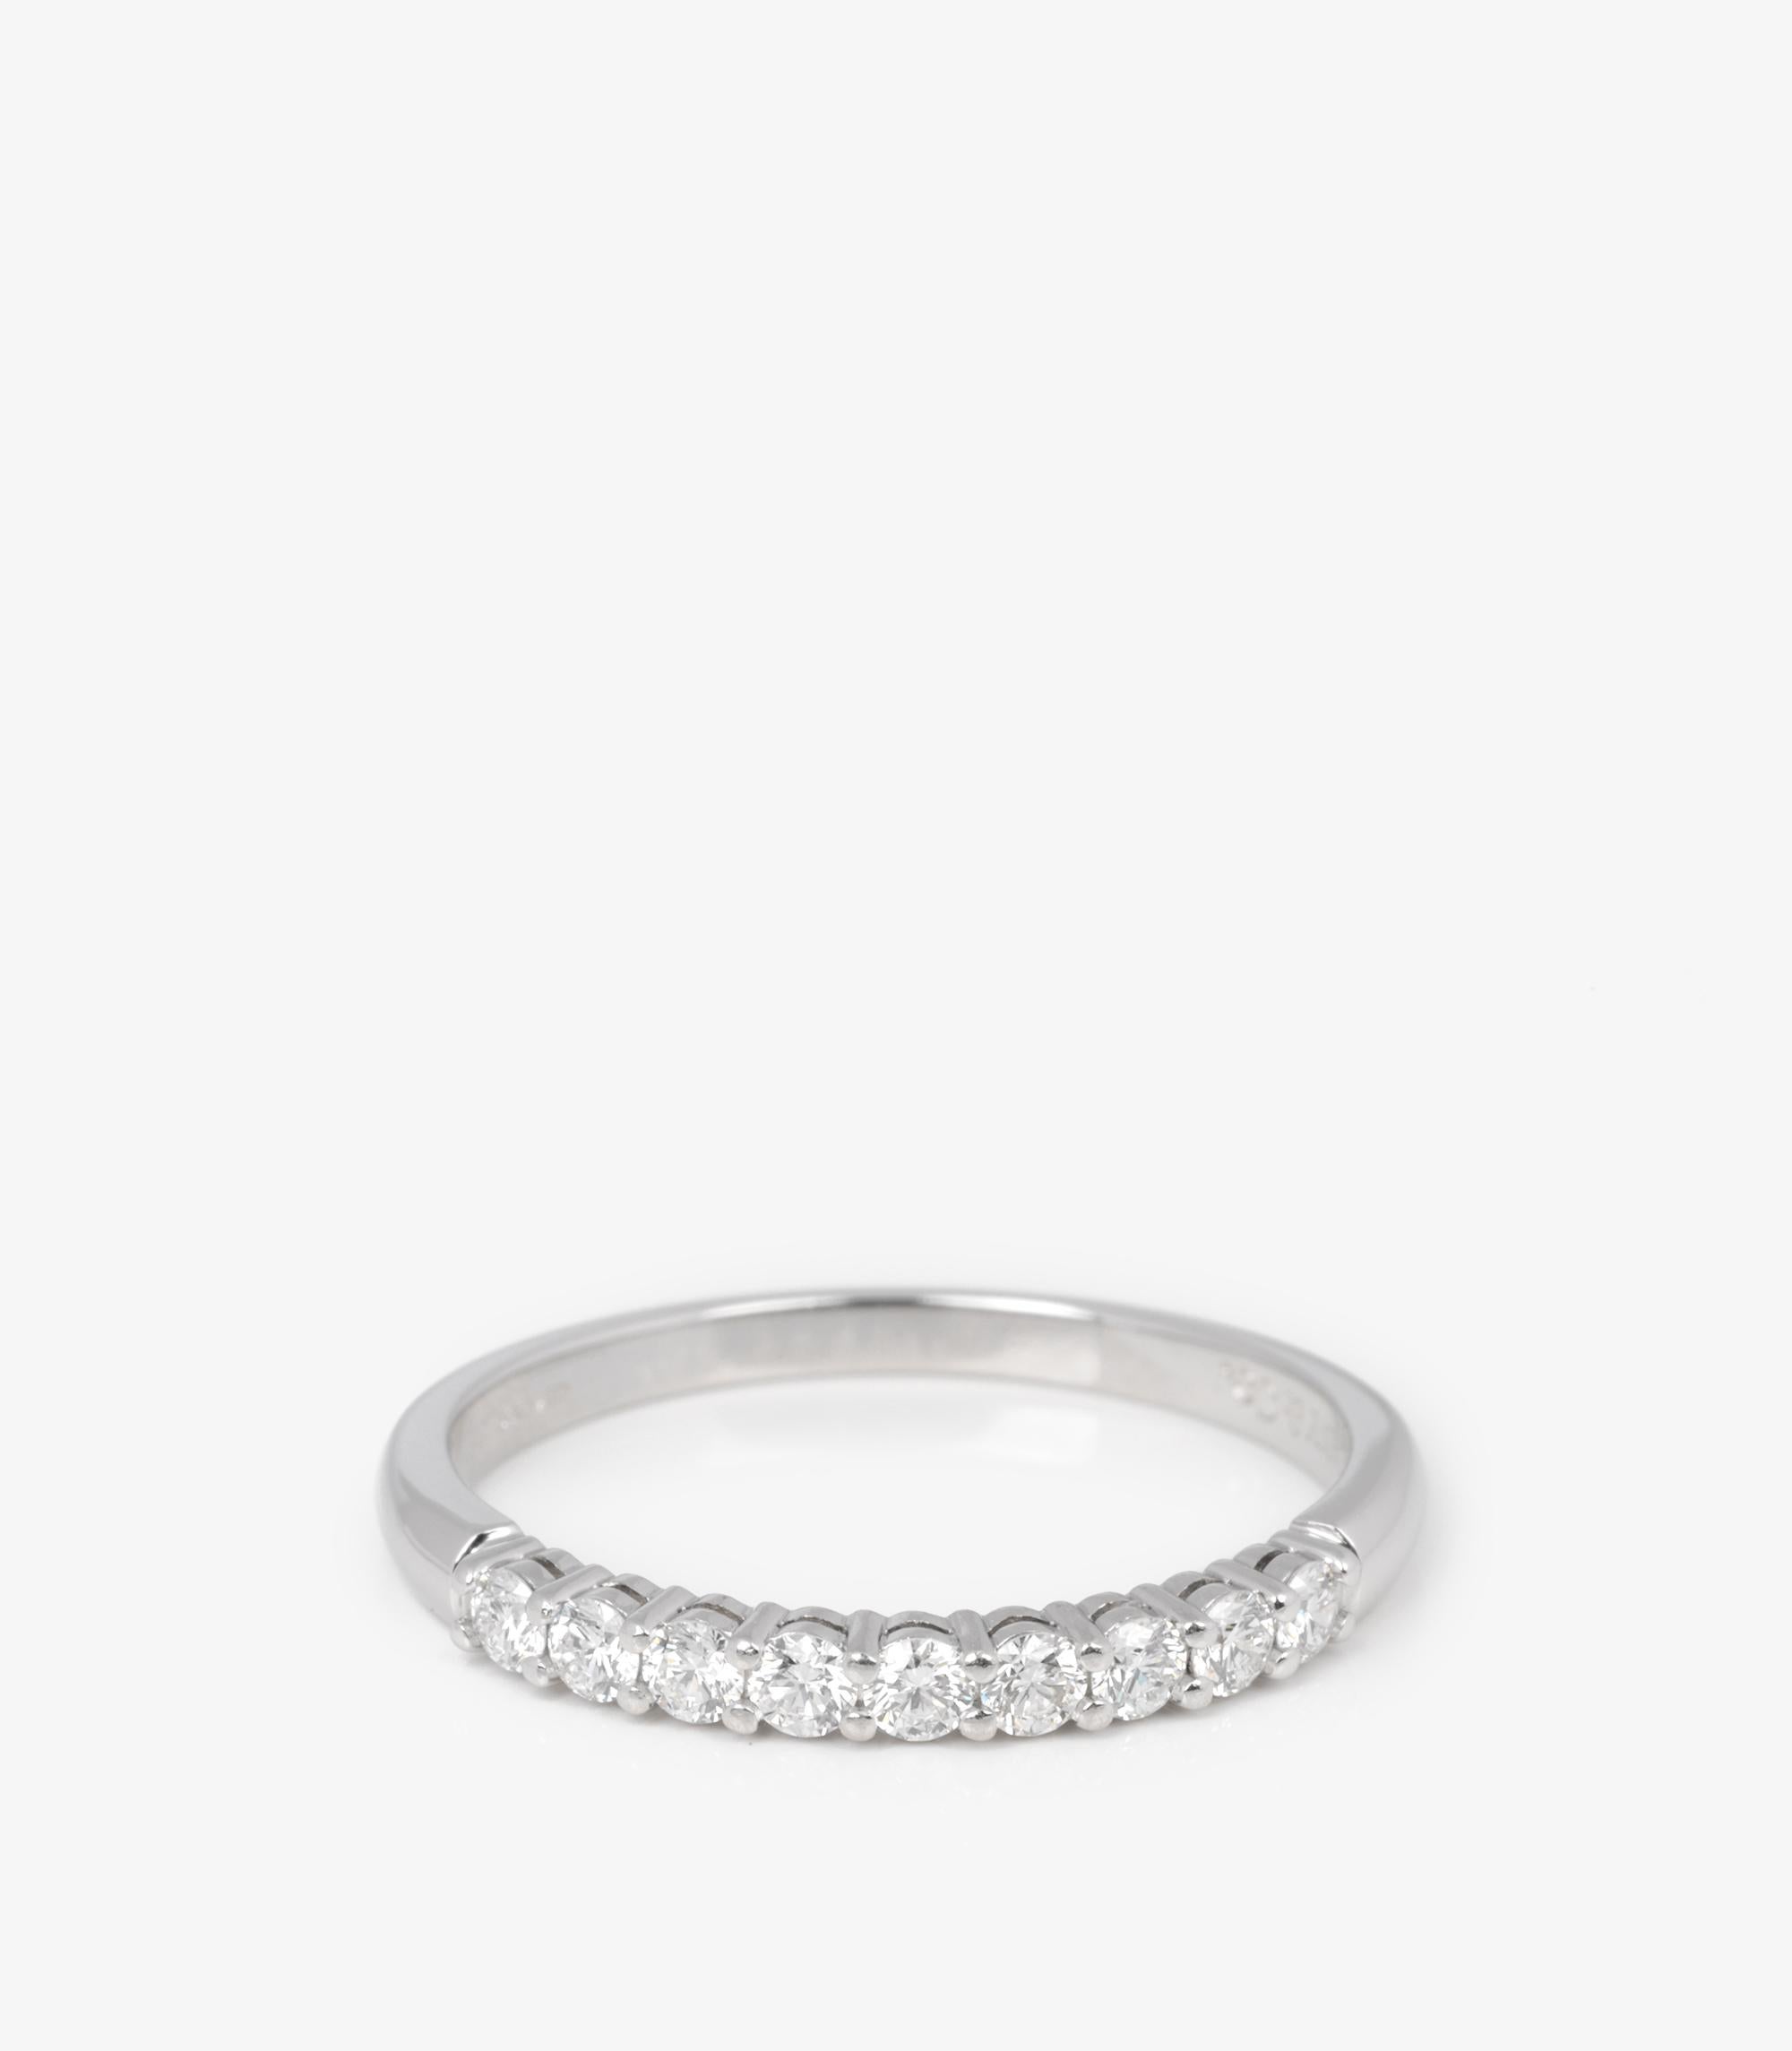 Tiffany & Co. Round Brilliant Cut Diamond Forever Half Eternity Ring

Brand- Tiffany & Co.
Model- Half Eternity Ring
Product Type- Ring
Material(s)- Platinum
Gemstone- Diamond
UK Ring Size- O
EU Ring Size- 55
US Ring Size- 7 1/4
Resizing Possible-